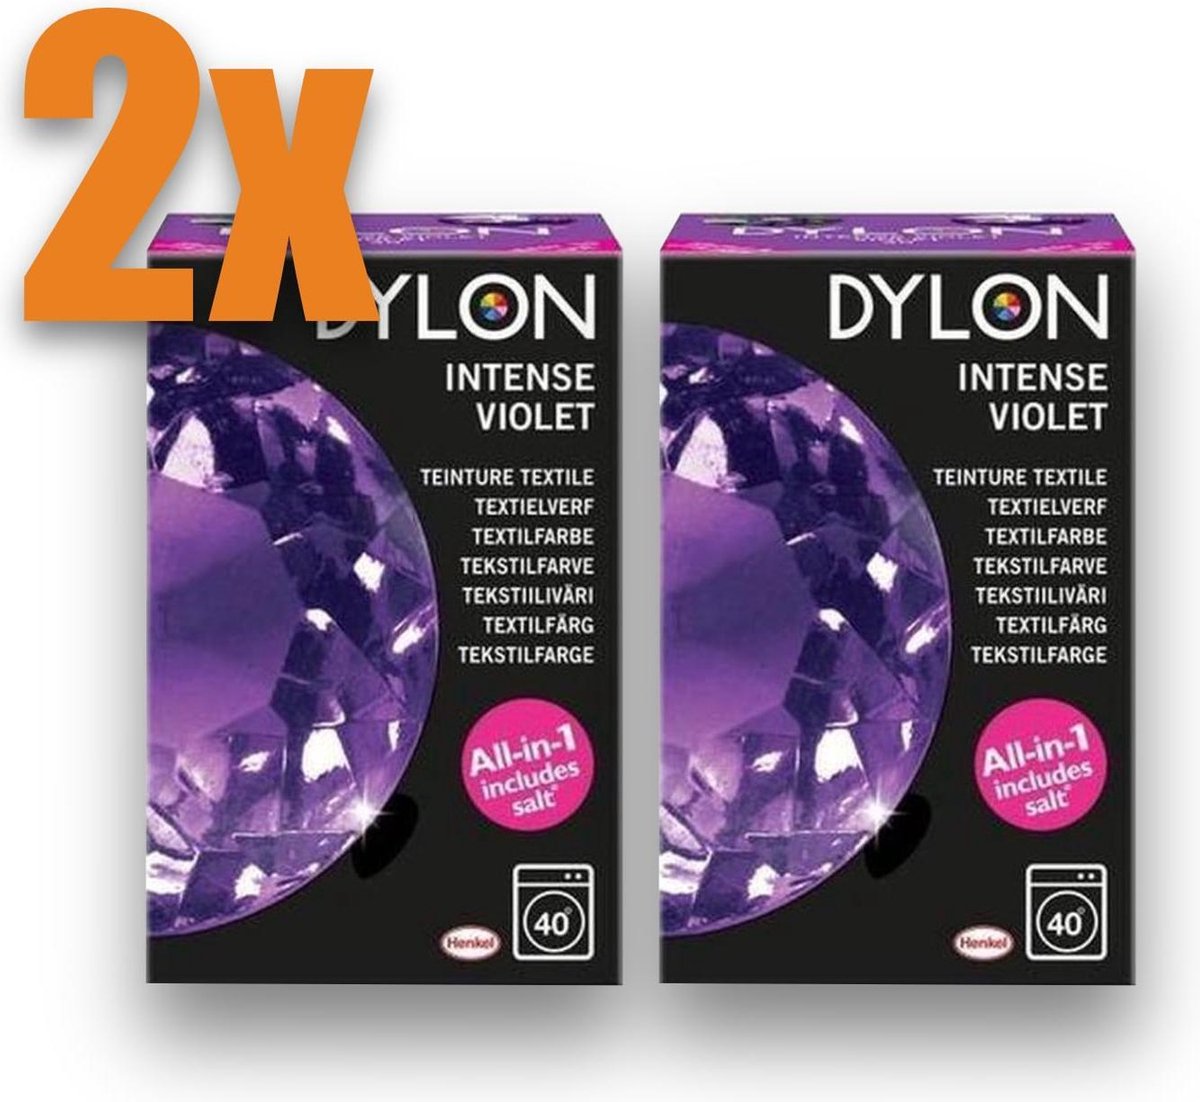 decaan parlement Tactiel gevoel bol.com | Textielverf Dylon paars Intense Violet 350g all-in (zout)  VOORDEELPACK 2 STUKS !